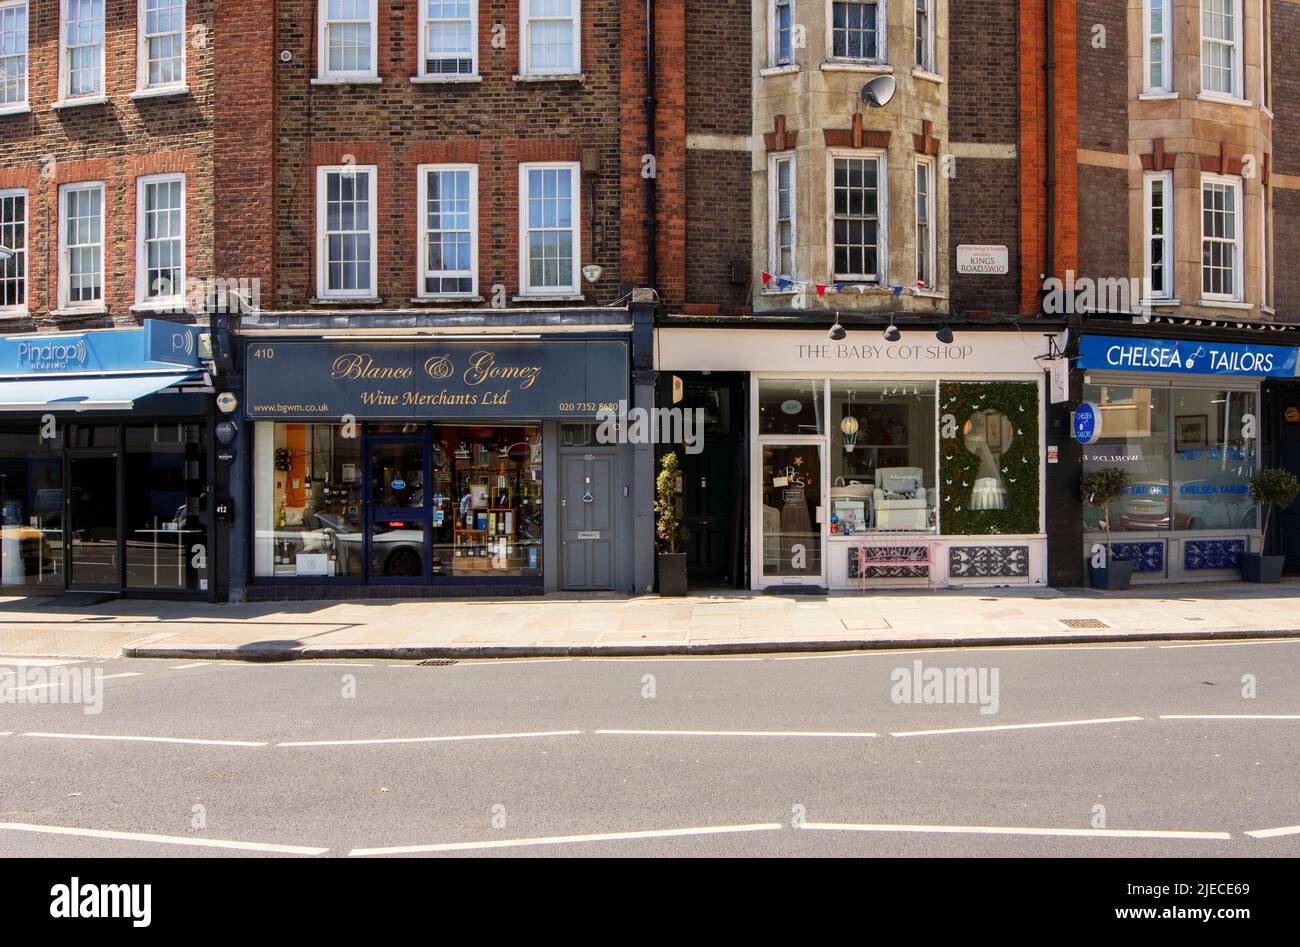 The King's Road, Londres, Reino Unido; una calle de tiendas de moda que se extiende a 2 km de Fulham a Sloane Square, mostrando el Fin del Mundo Foto de stock